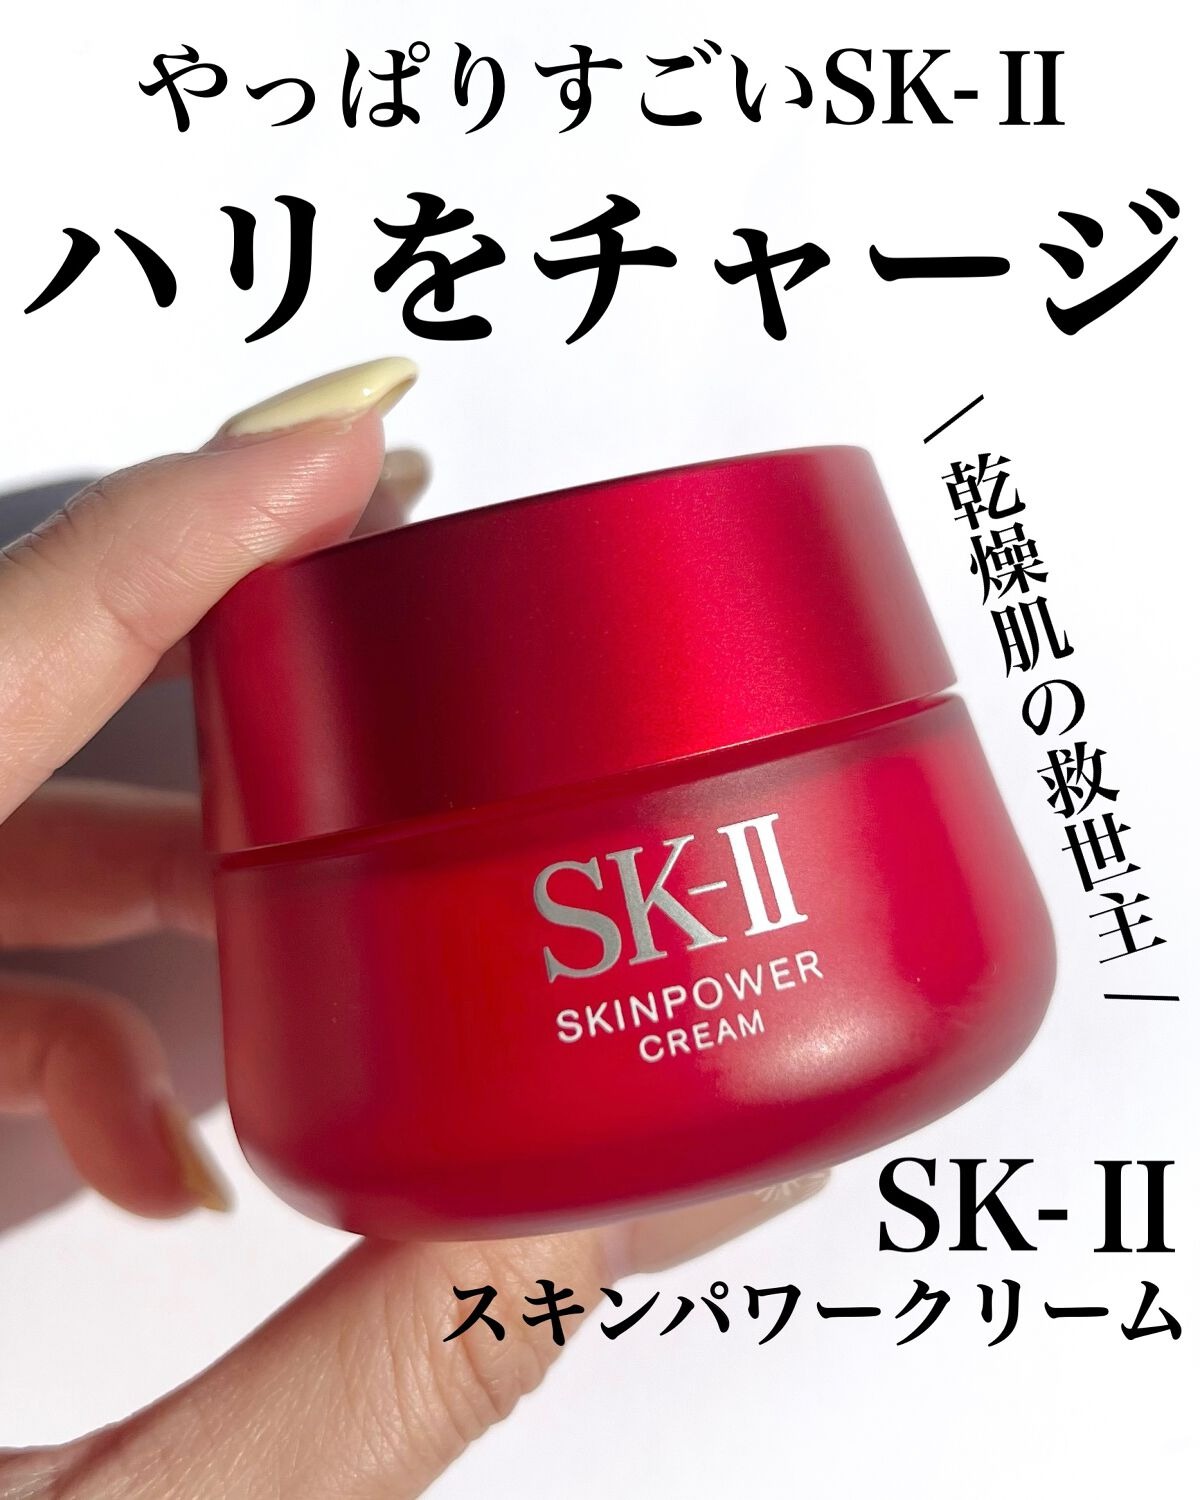 sk ii skinpower cream